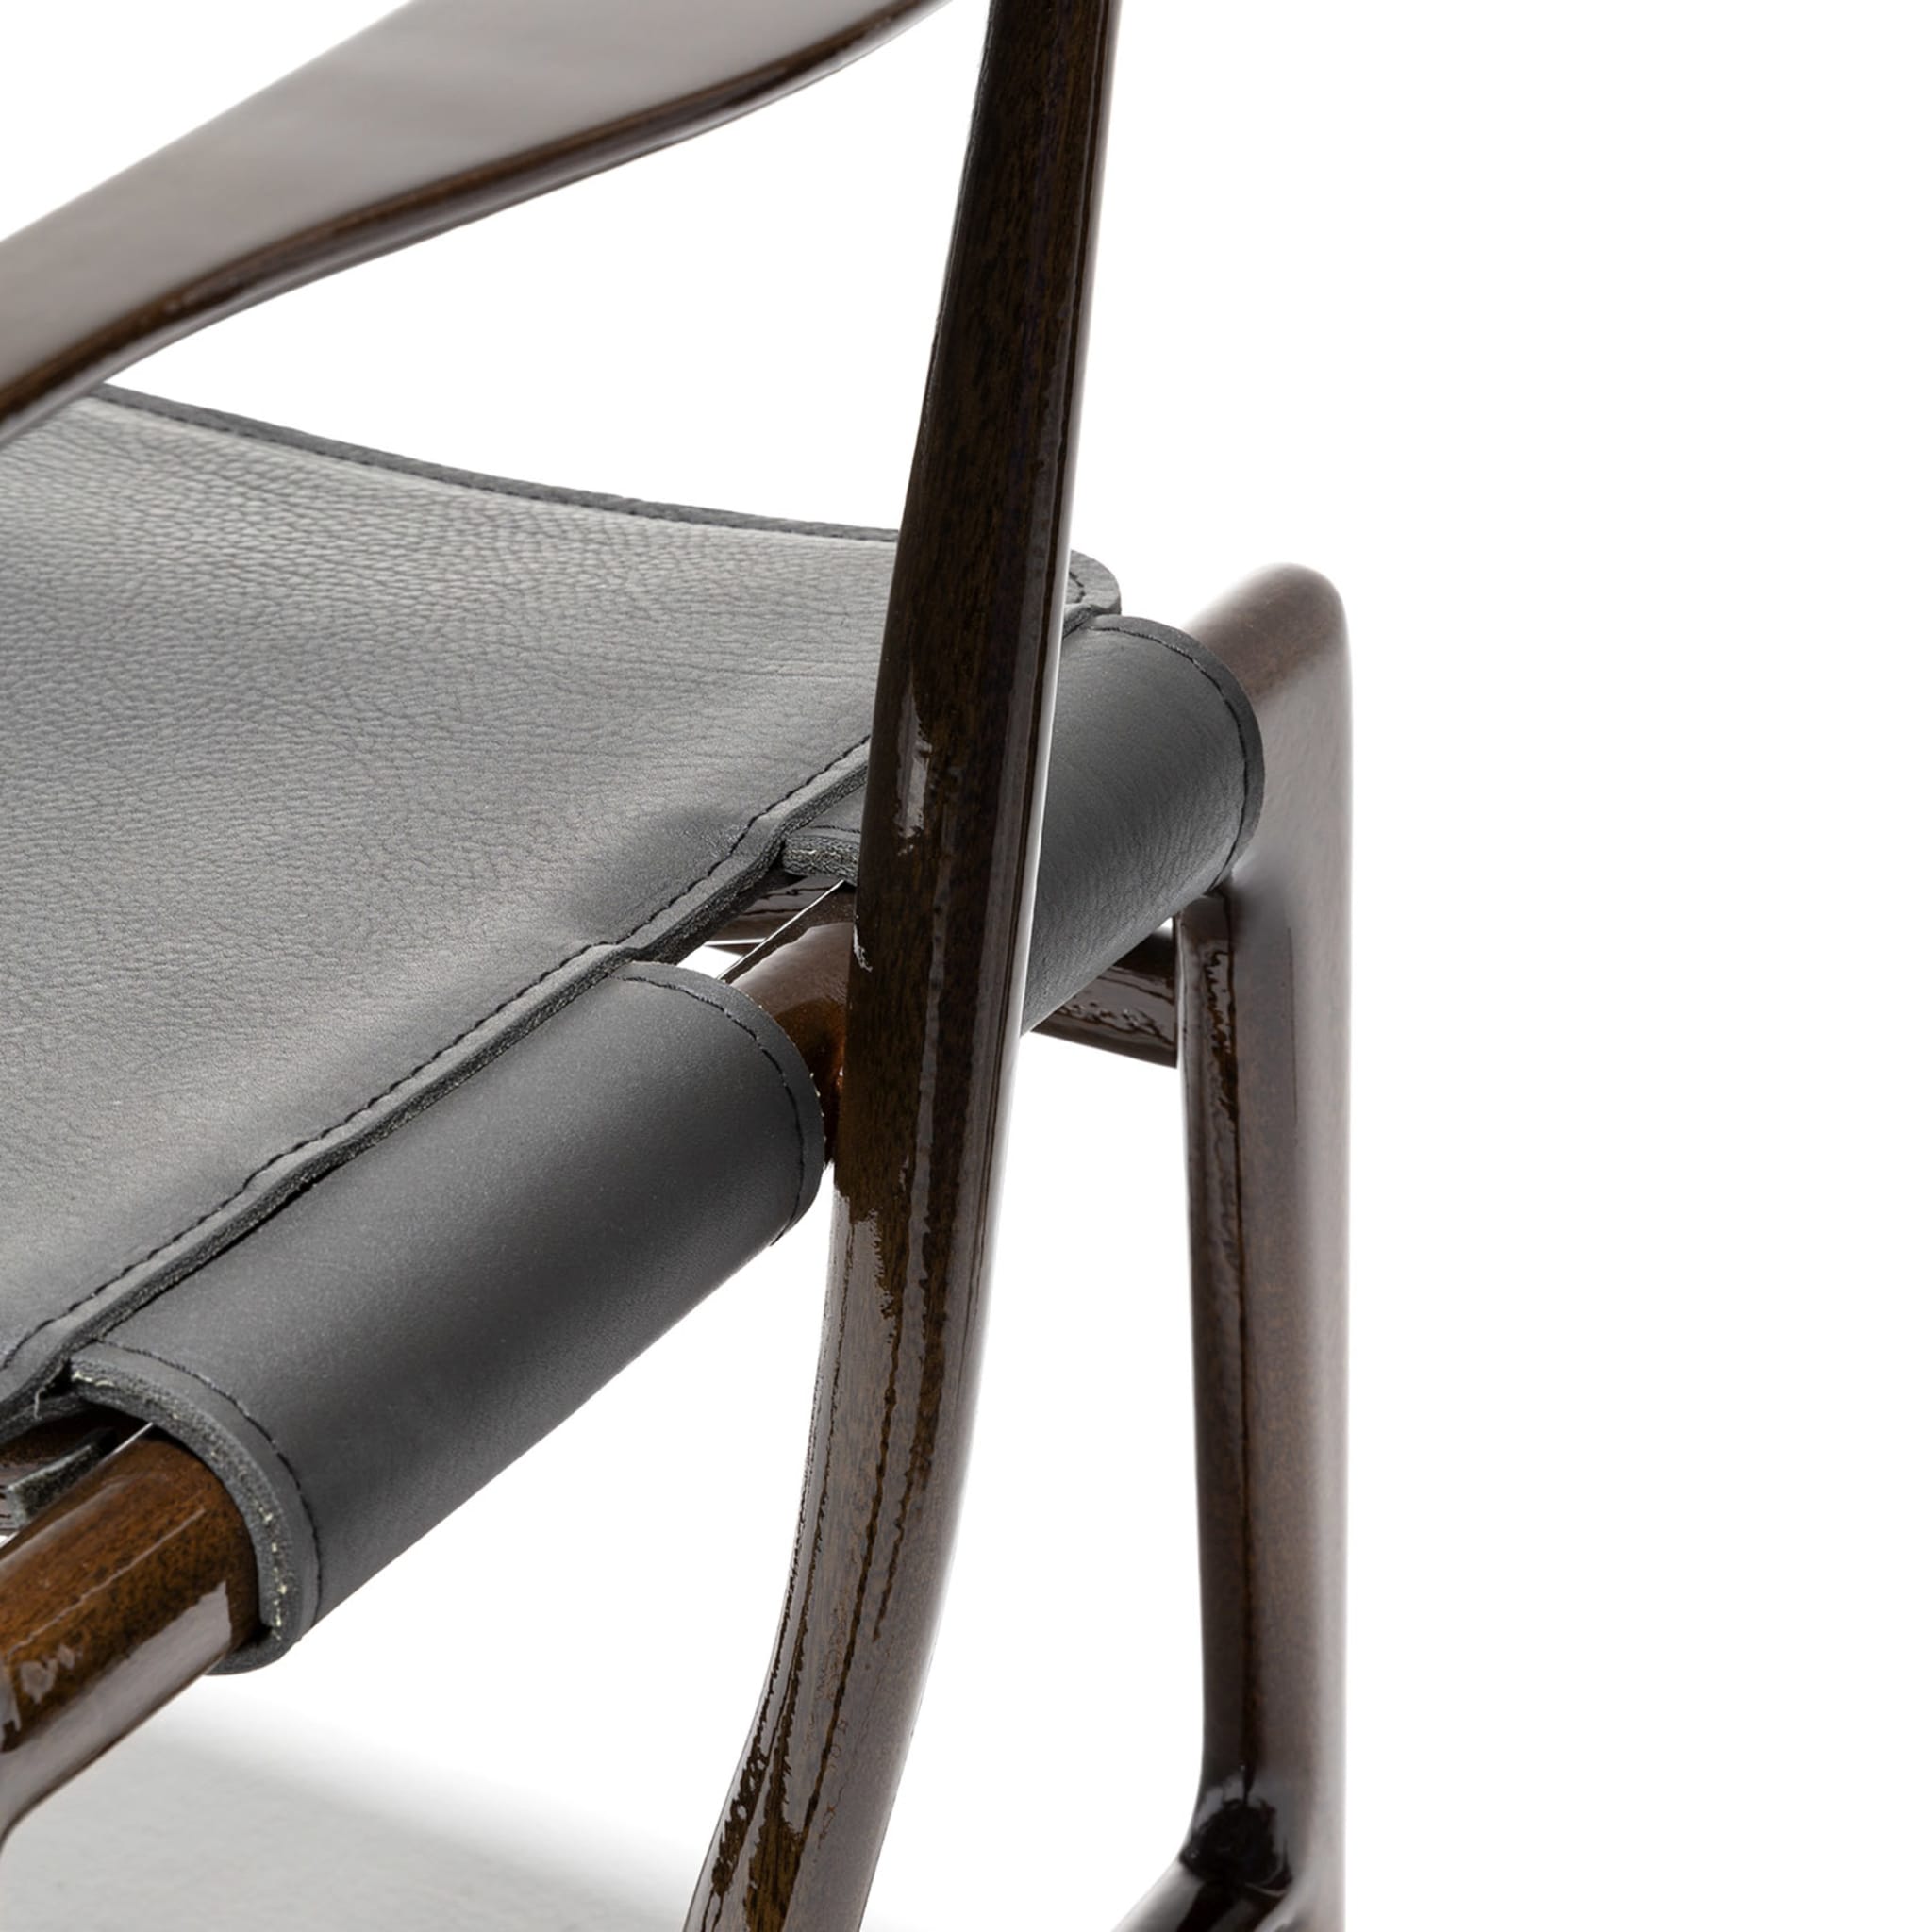 Levante Dark Leather Chair by Massimo Castagna #6 - Alternative view 1